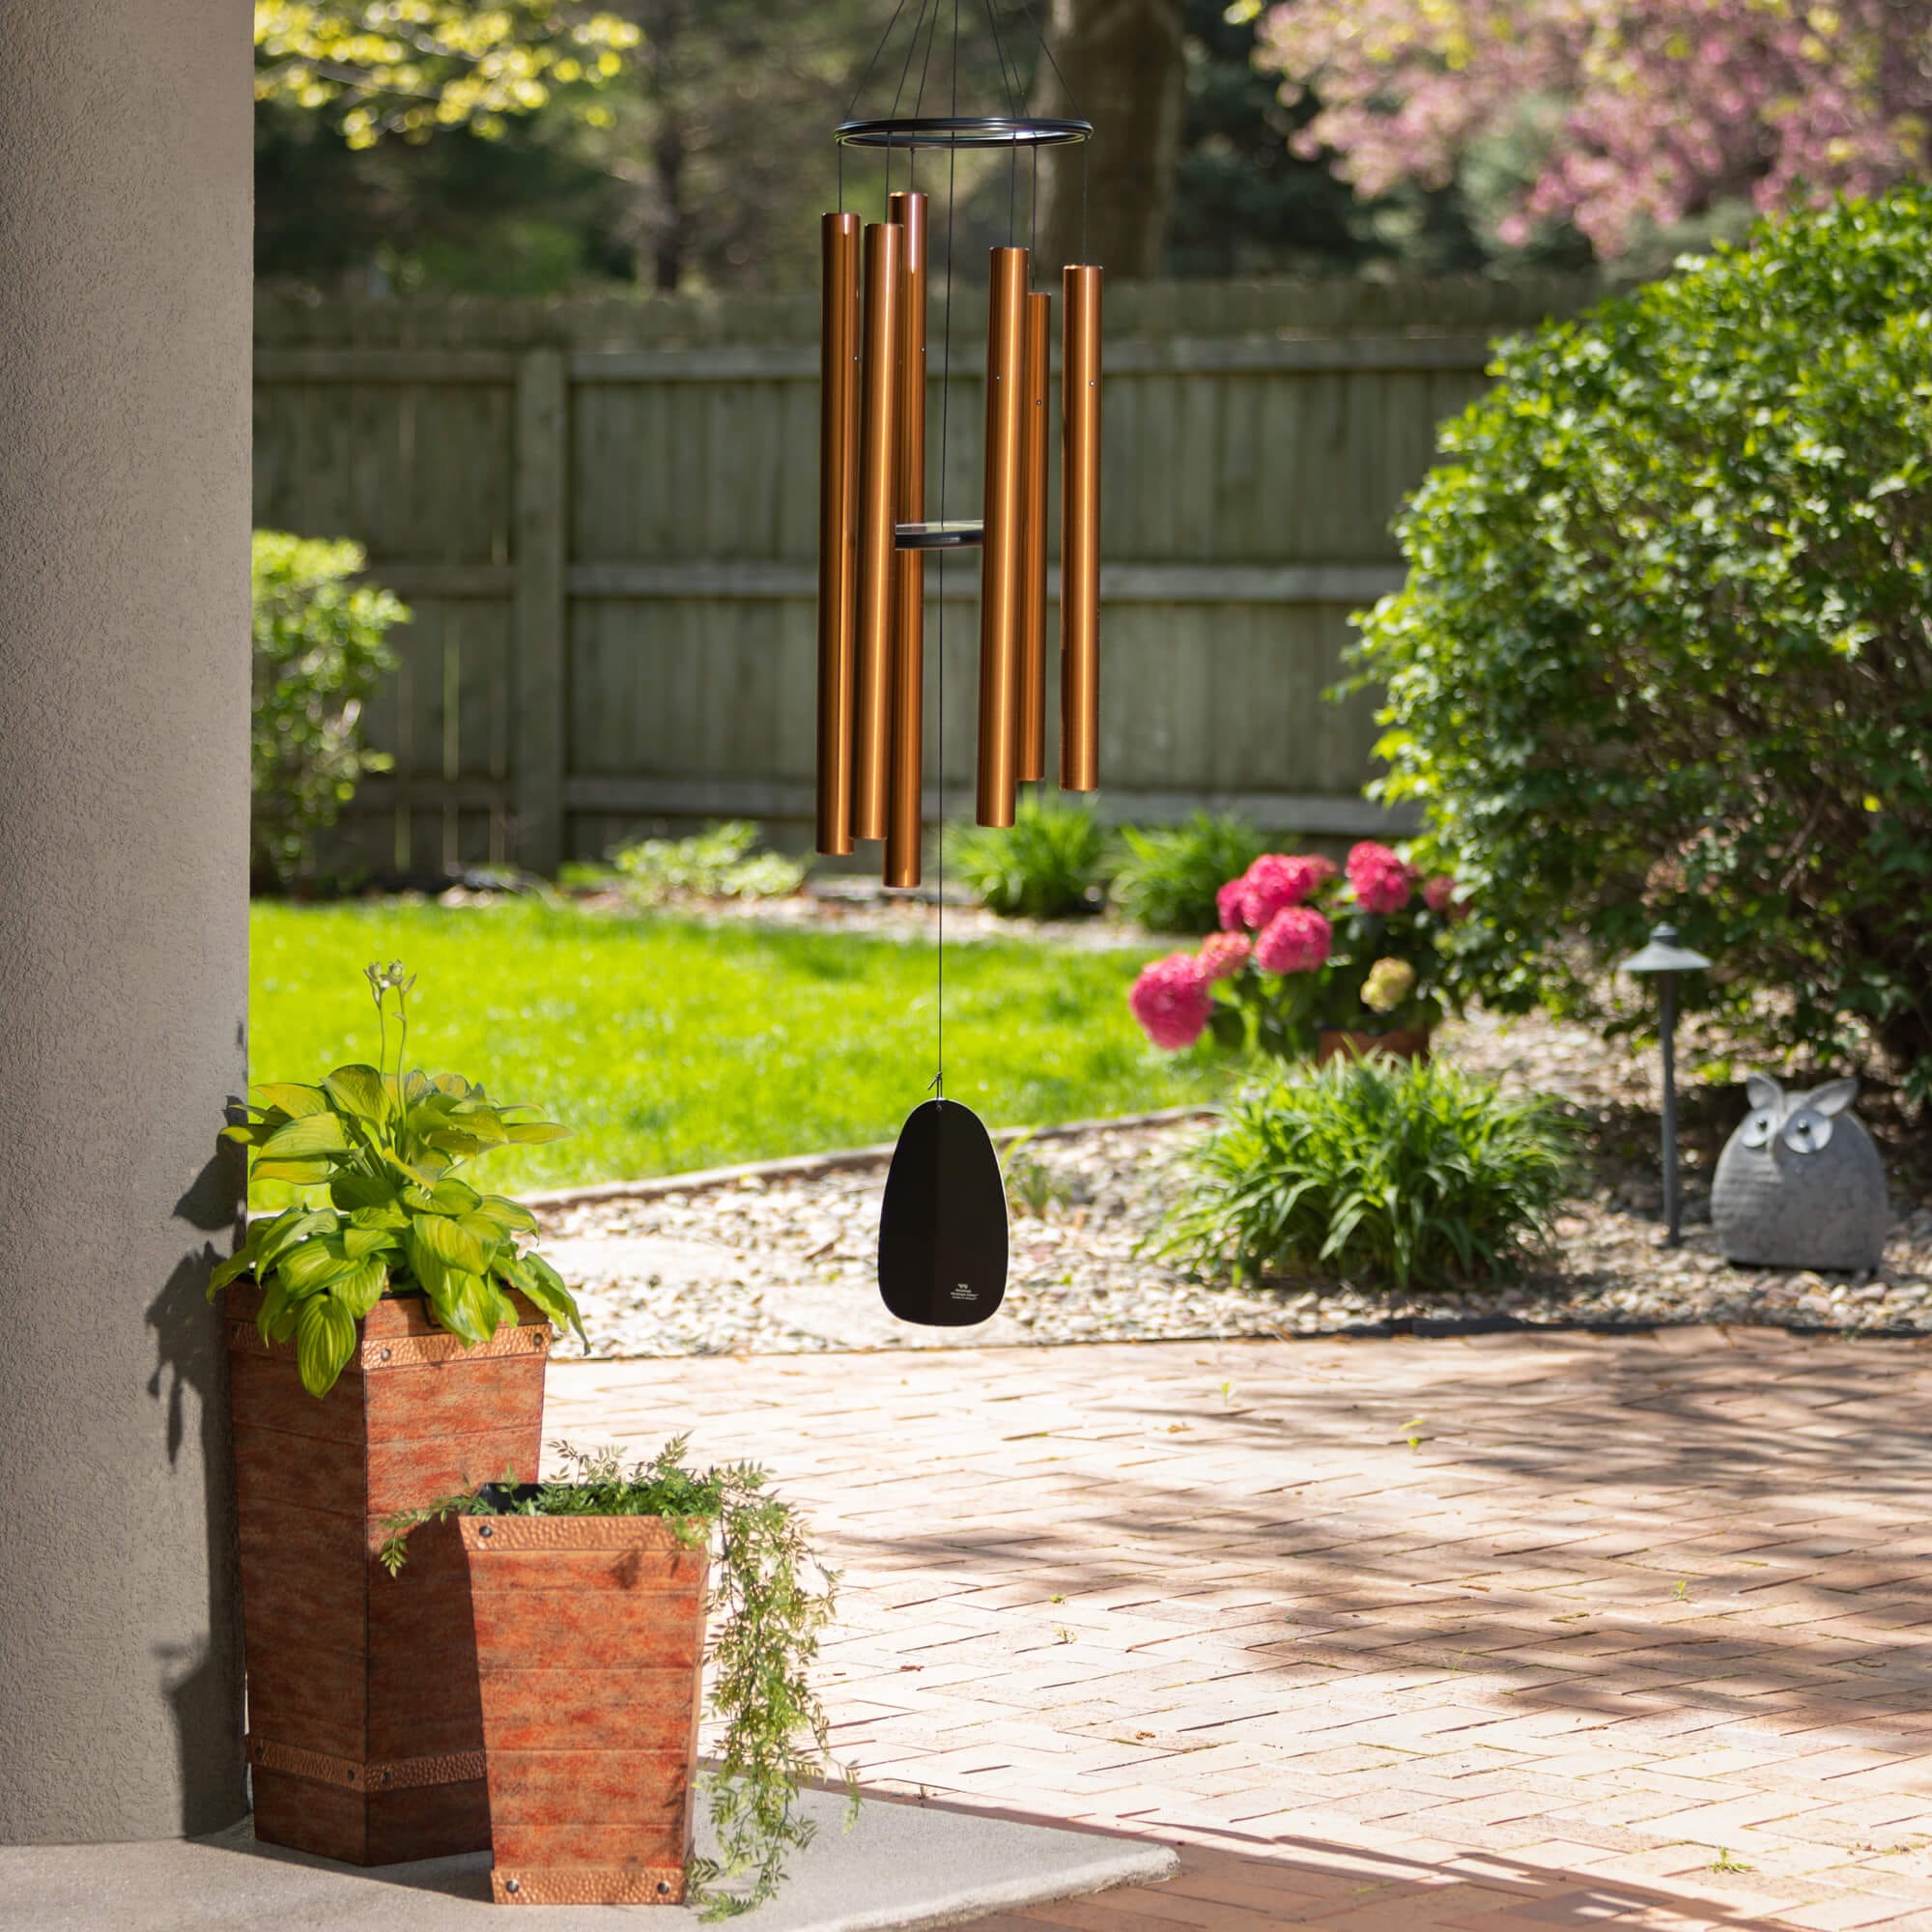 Outdoor Trio Copper Planters Elevate Home Decor - Outdoors